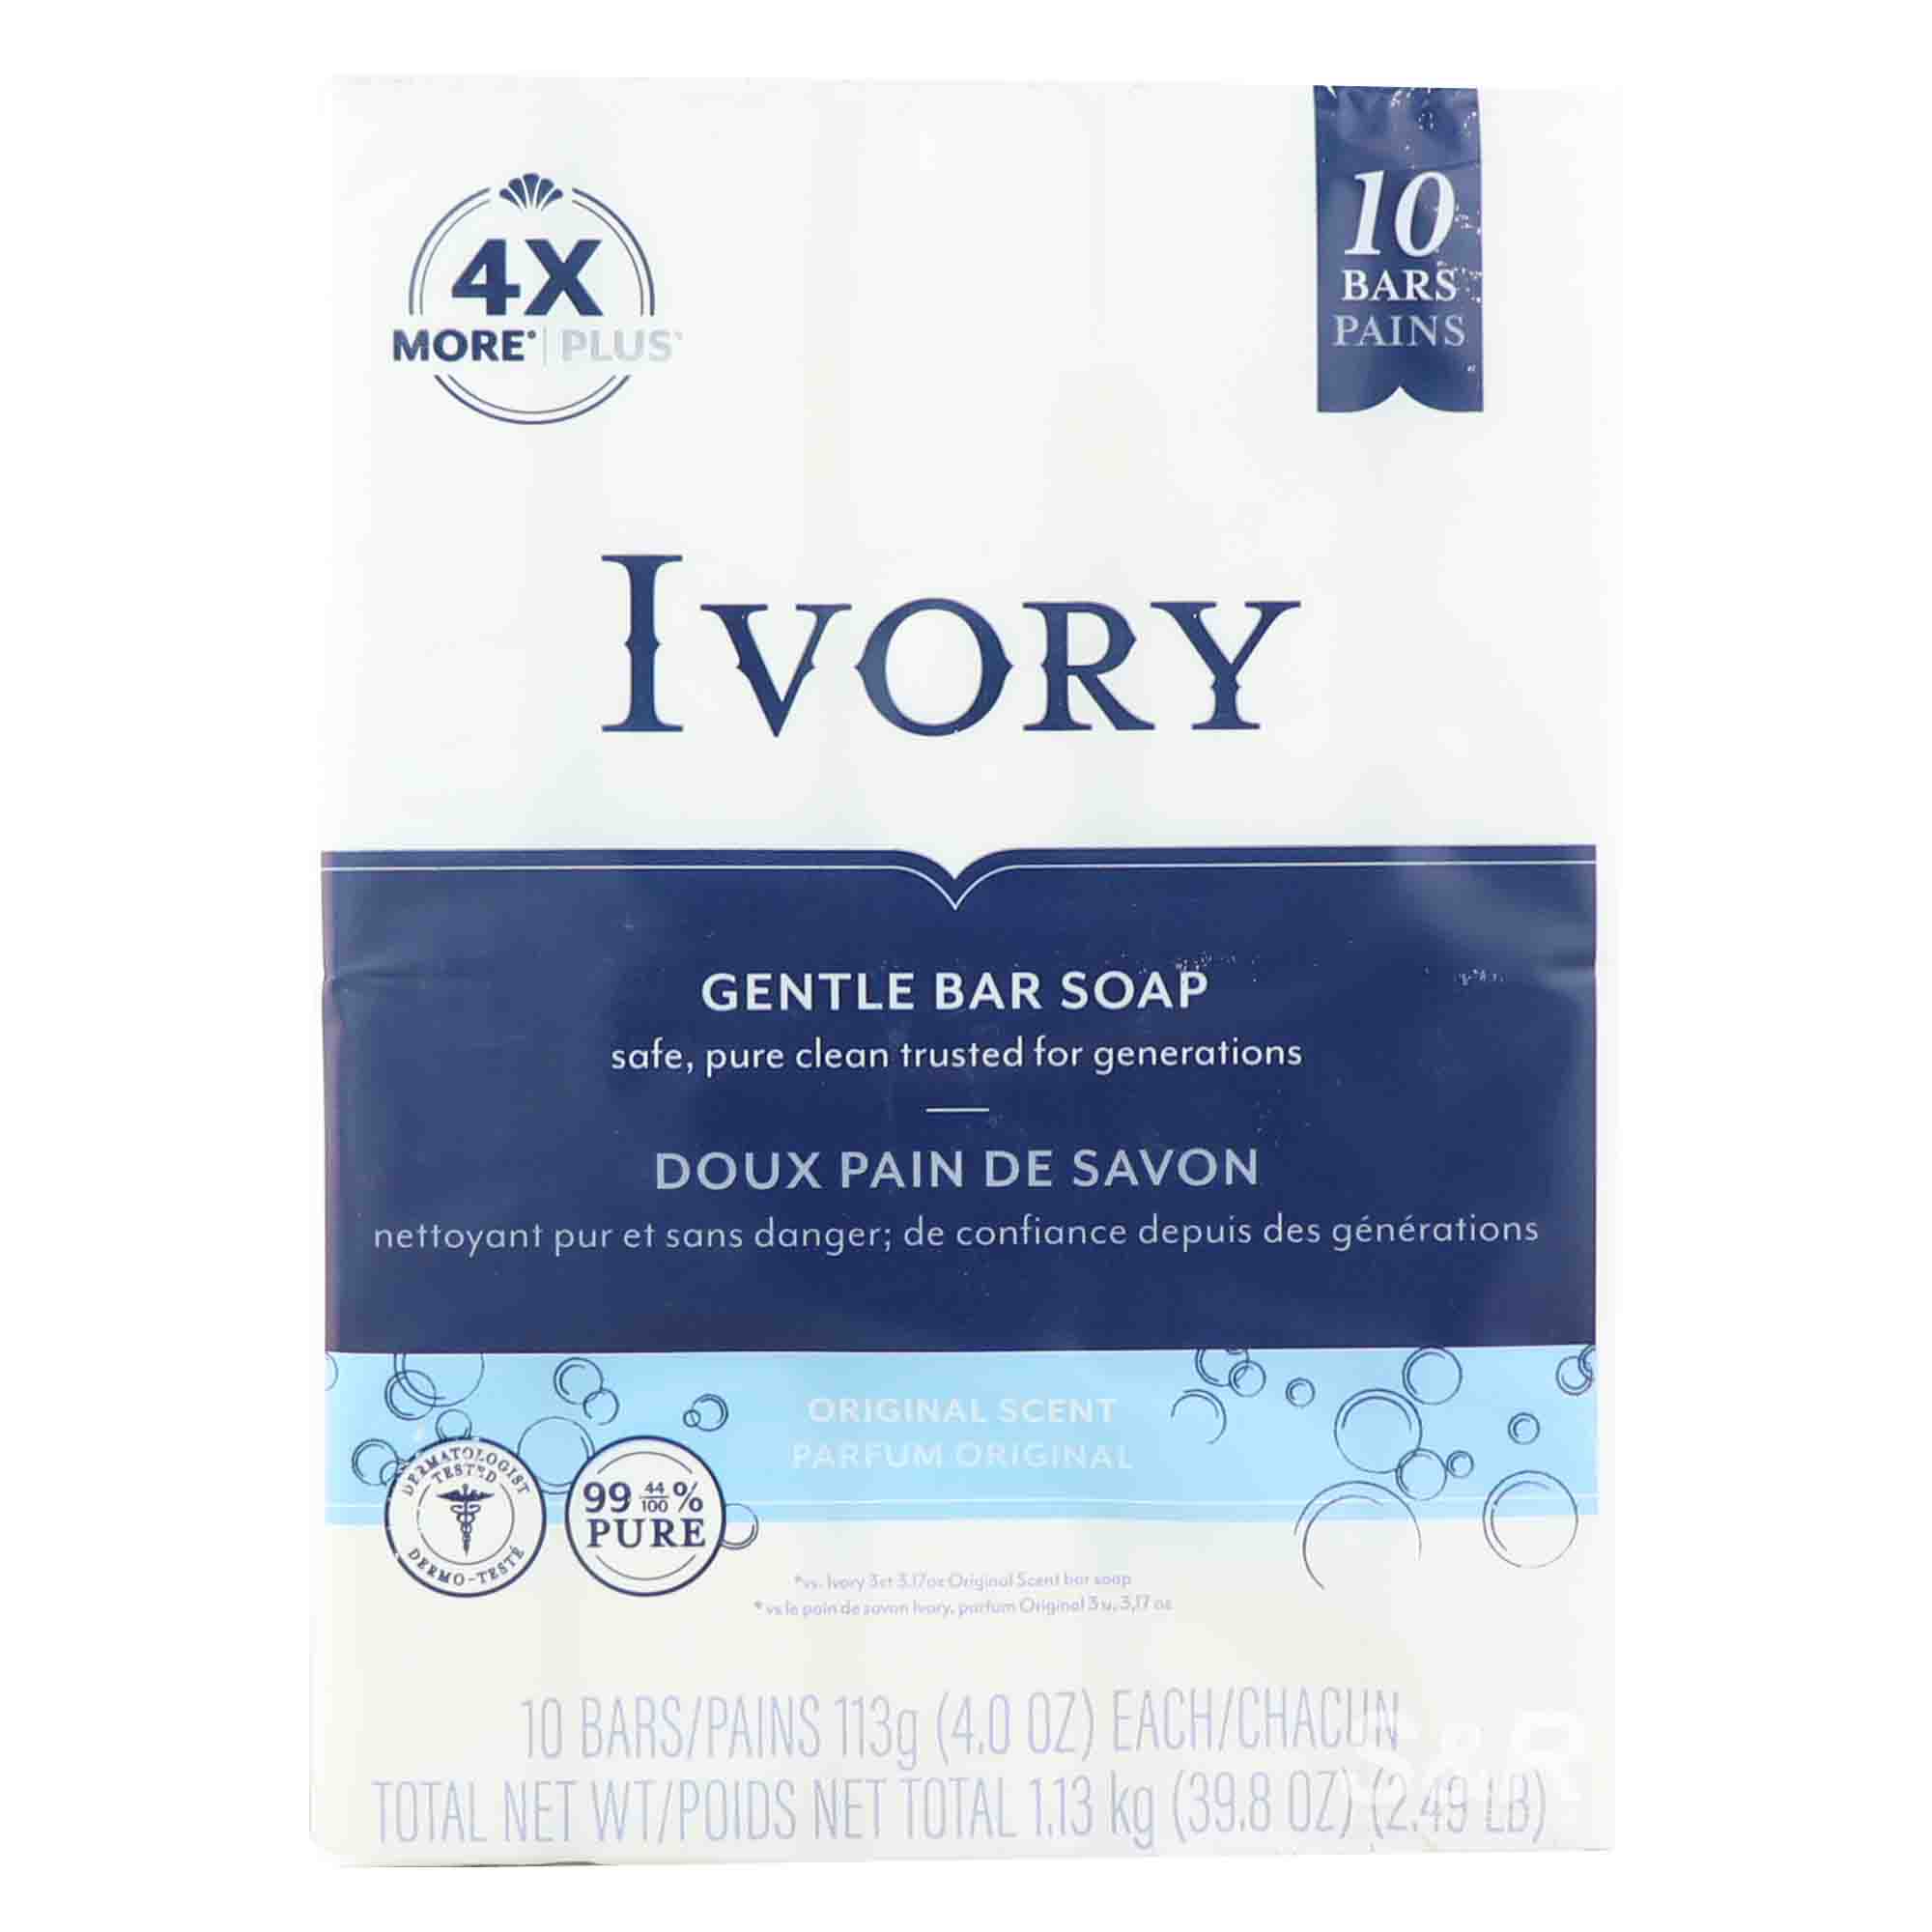 Ivory Original Gentle Bar Soap (113g x 10pcs)